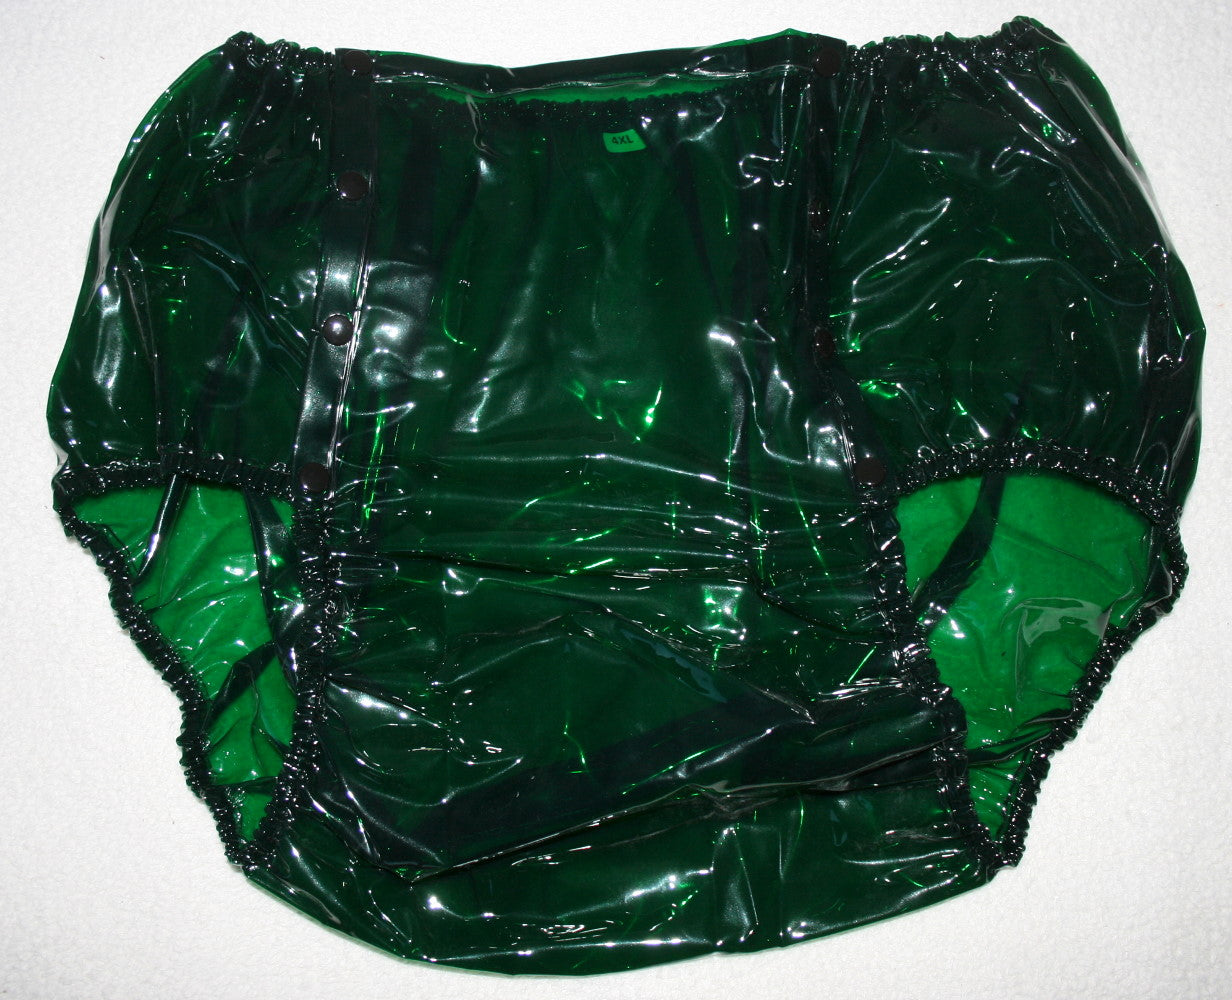 PVC Knöpfer Windelhose Gummihose adult baby (PA59) grün glasklar transparent